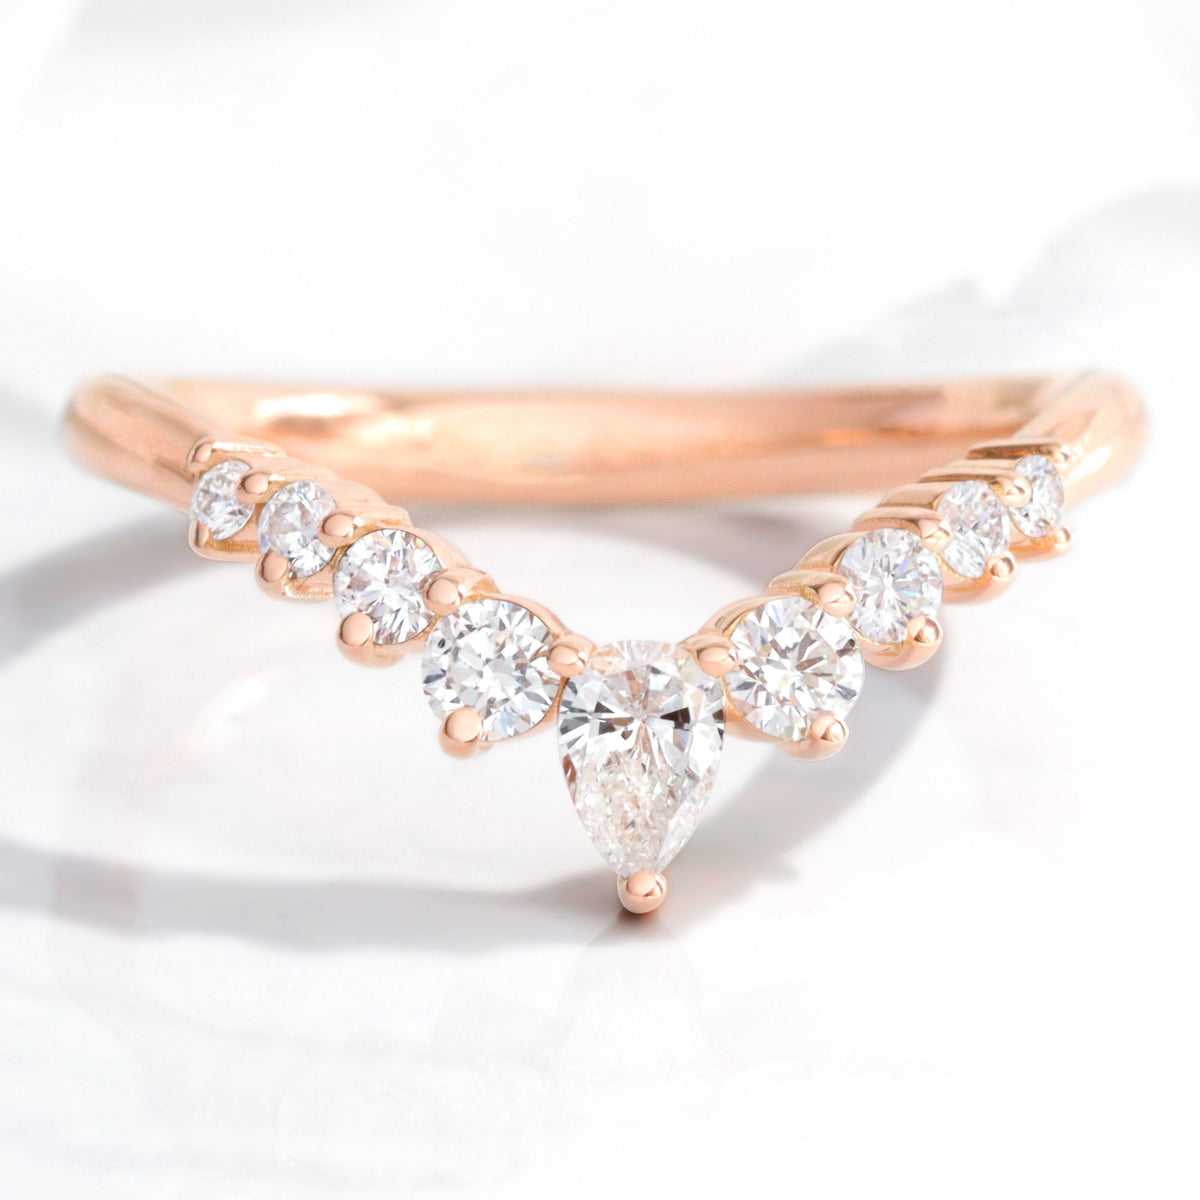 Wishbone diamond wedding ring rose gold V shaped curved wedding band la more design jewelry